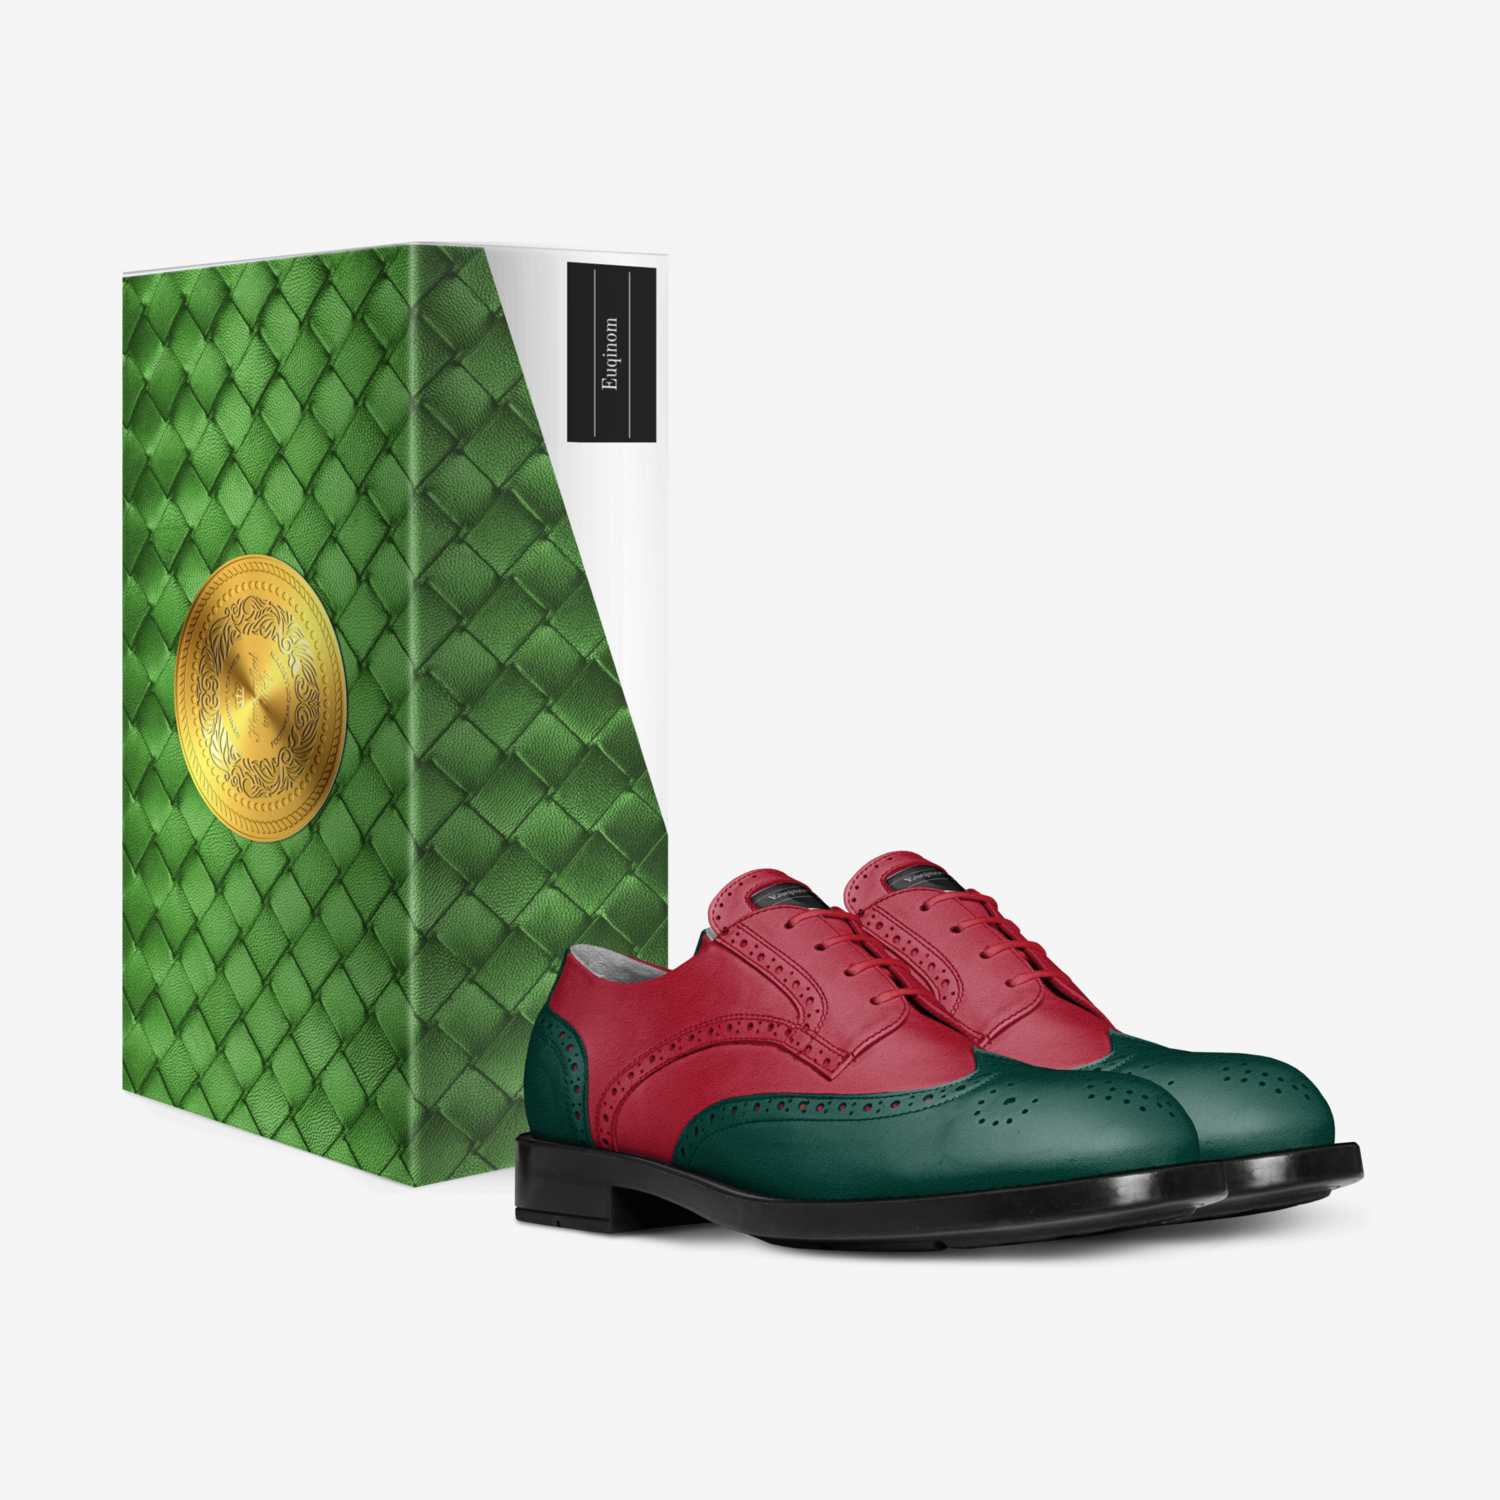 Euqinom custom made in Italy shoes by Monique Burston | Box view